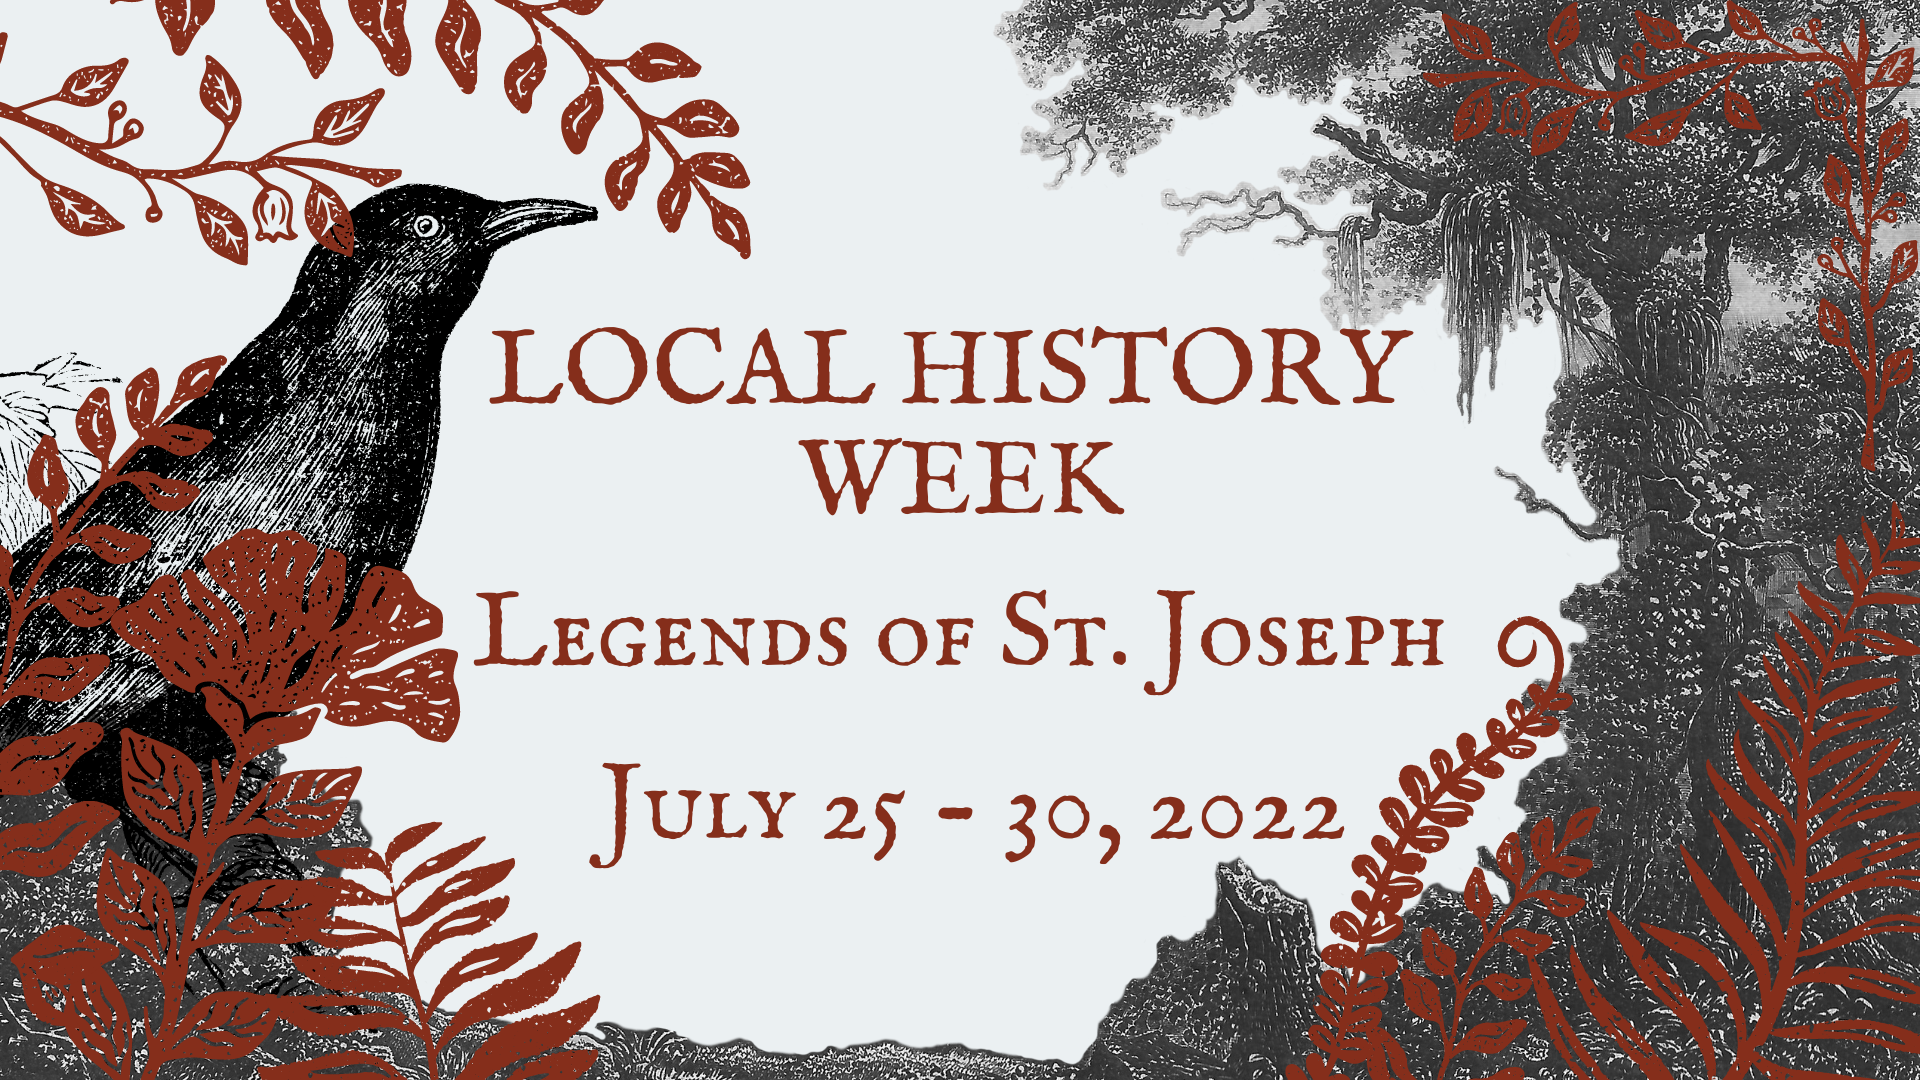 Local History Week Legends of St. Joseph July 25 - 30 2022